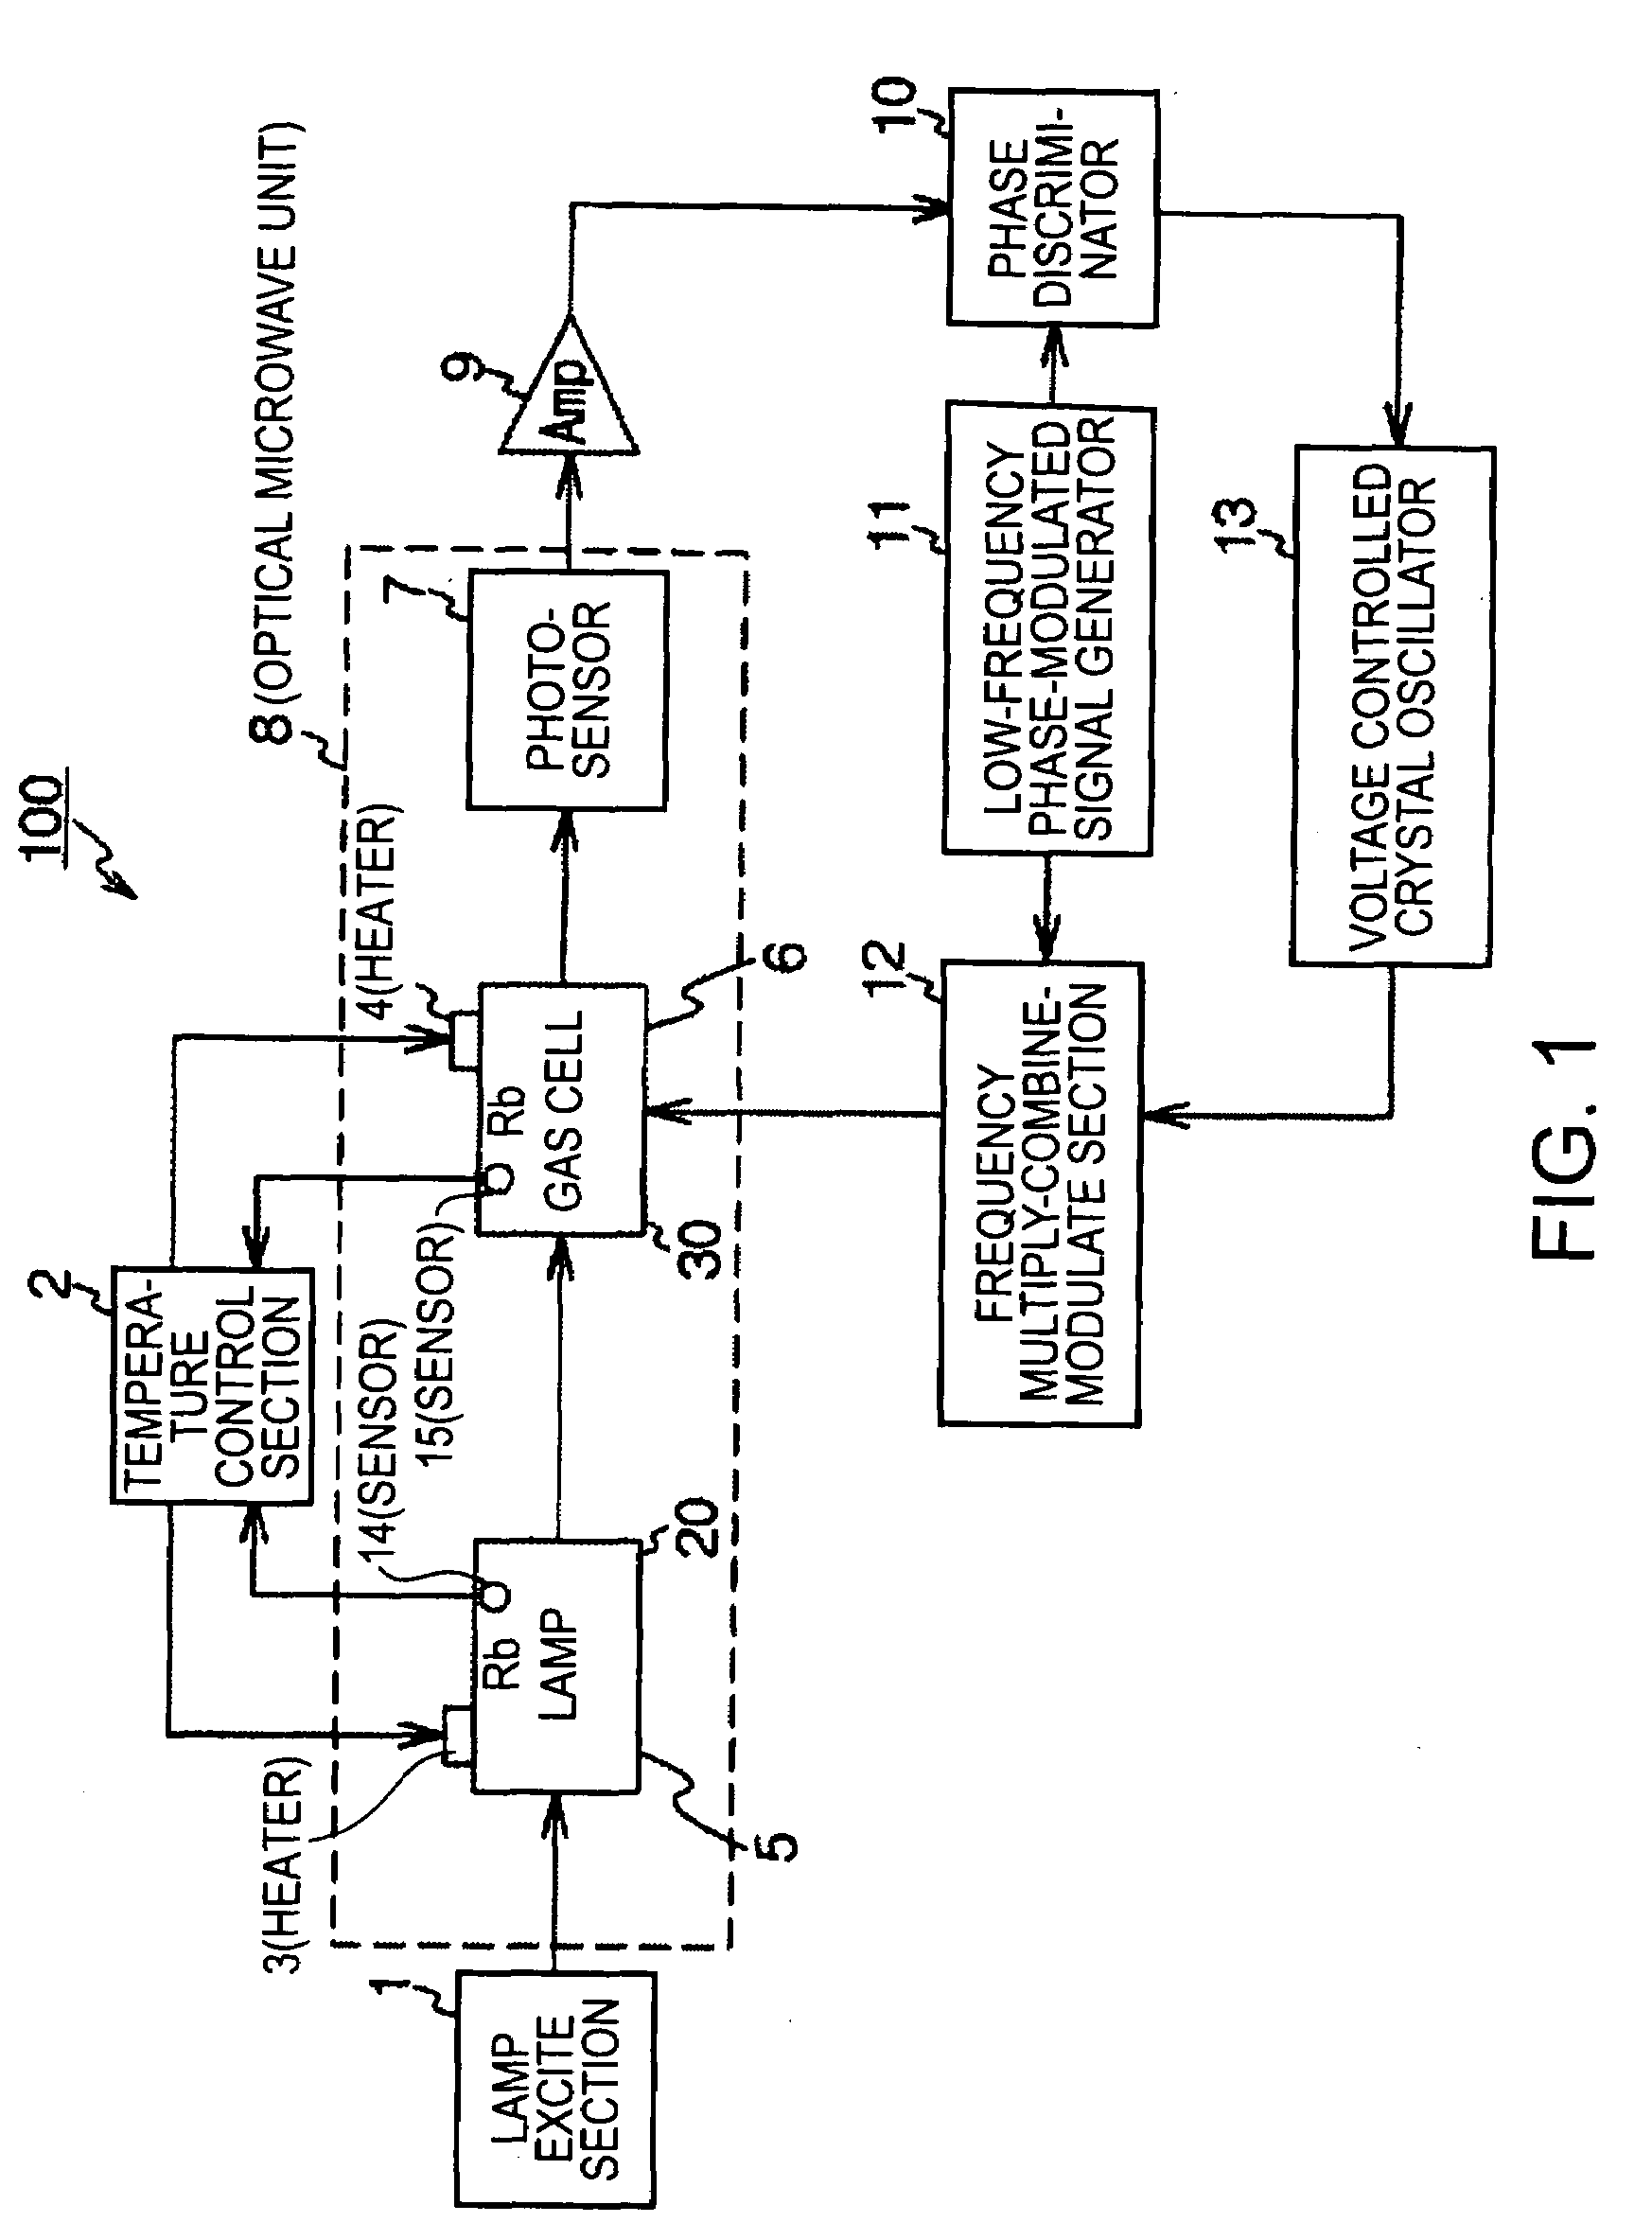 Atomic oscillator, method for sealing temperature detecting means, and rubidium atomic oscillator